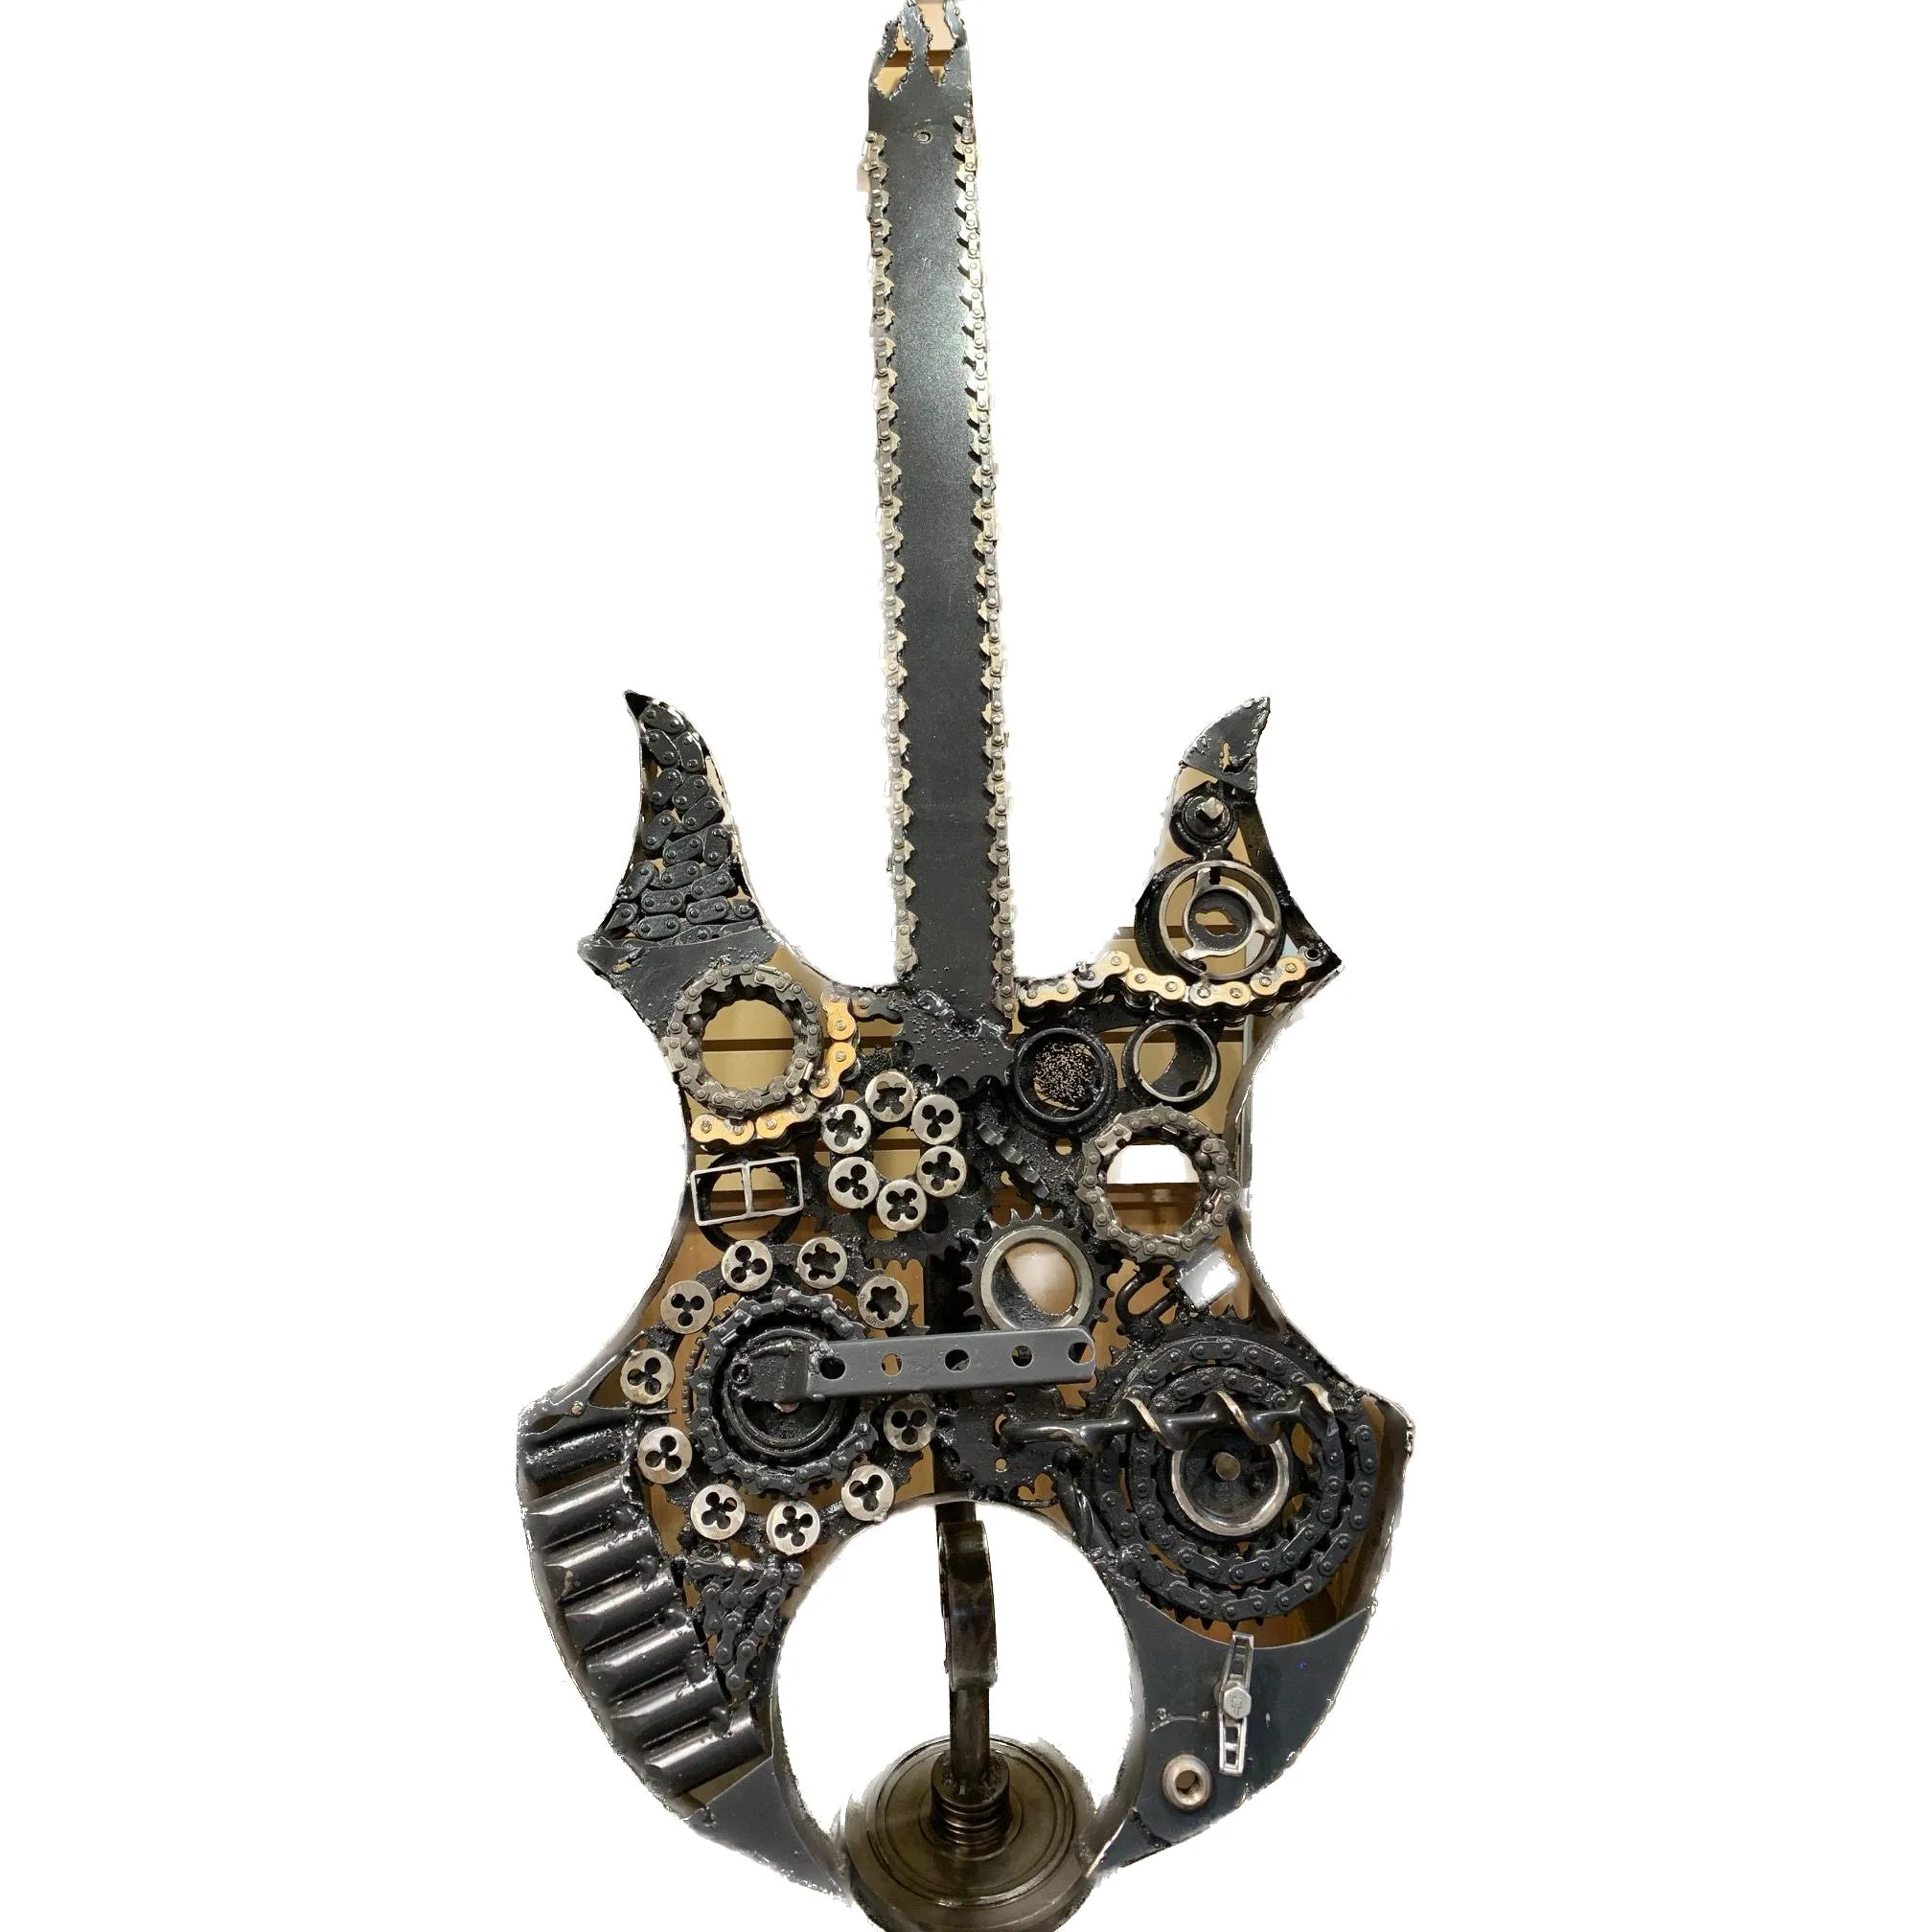 Guitar on custom stand “The Black Pearl” Prehistoric Online